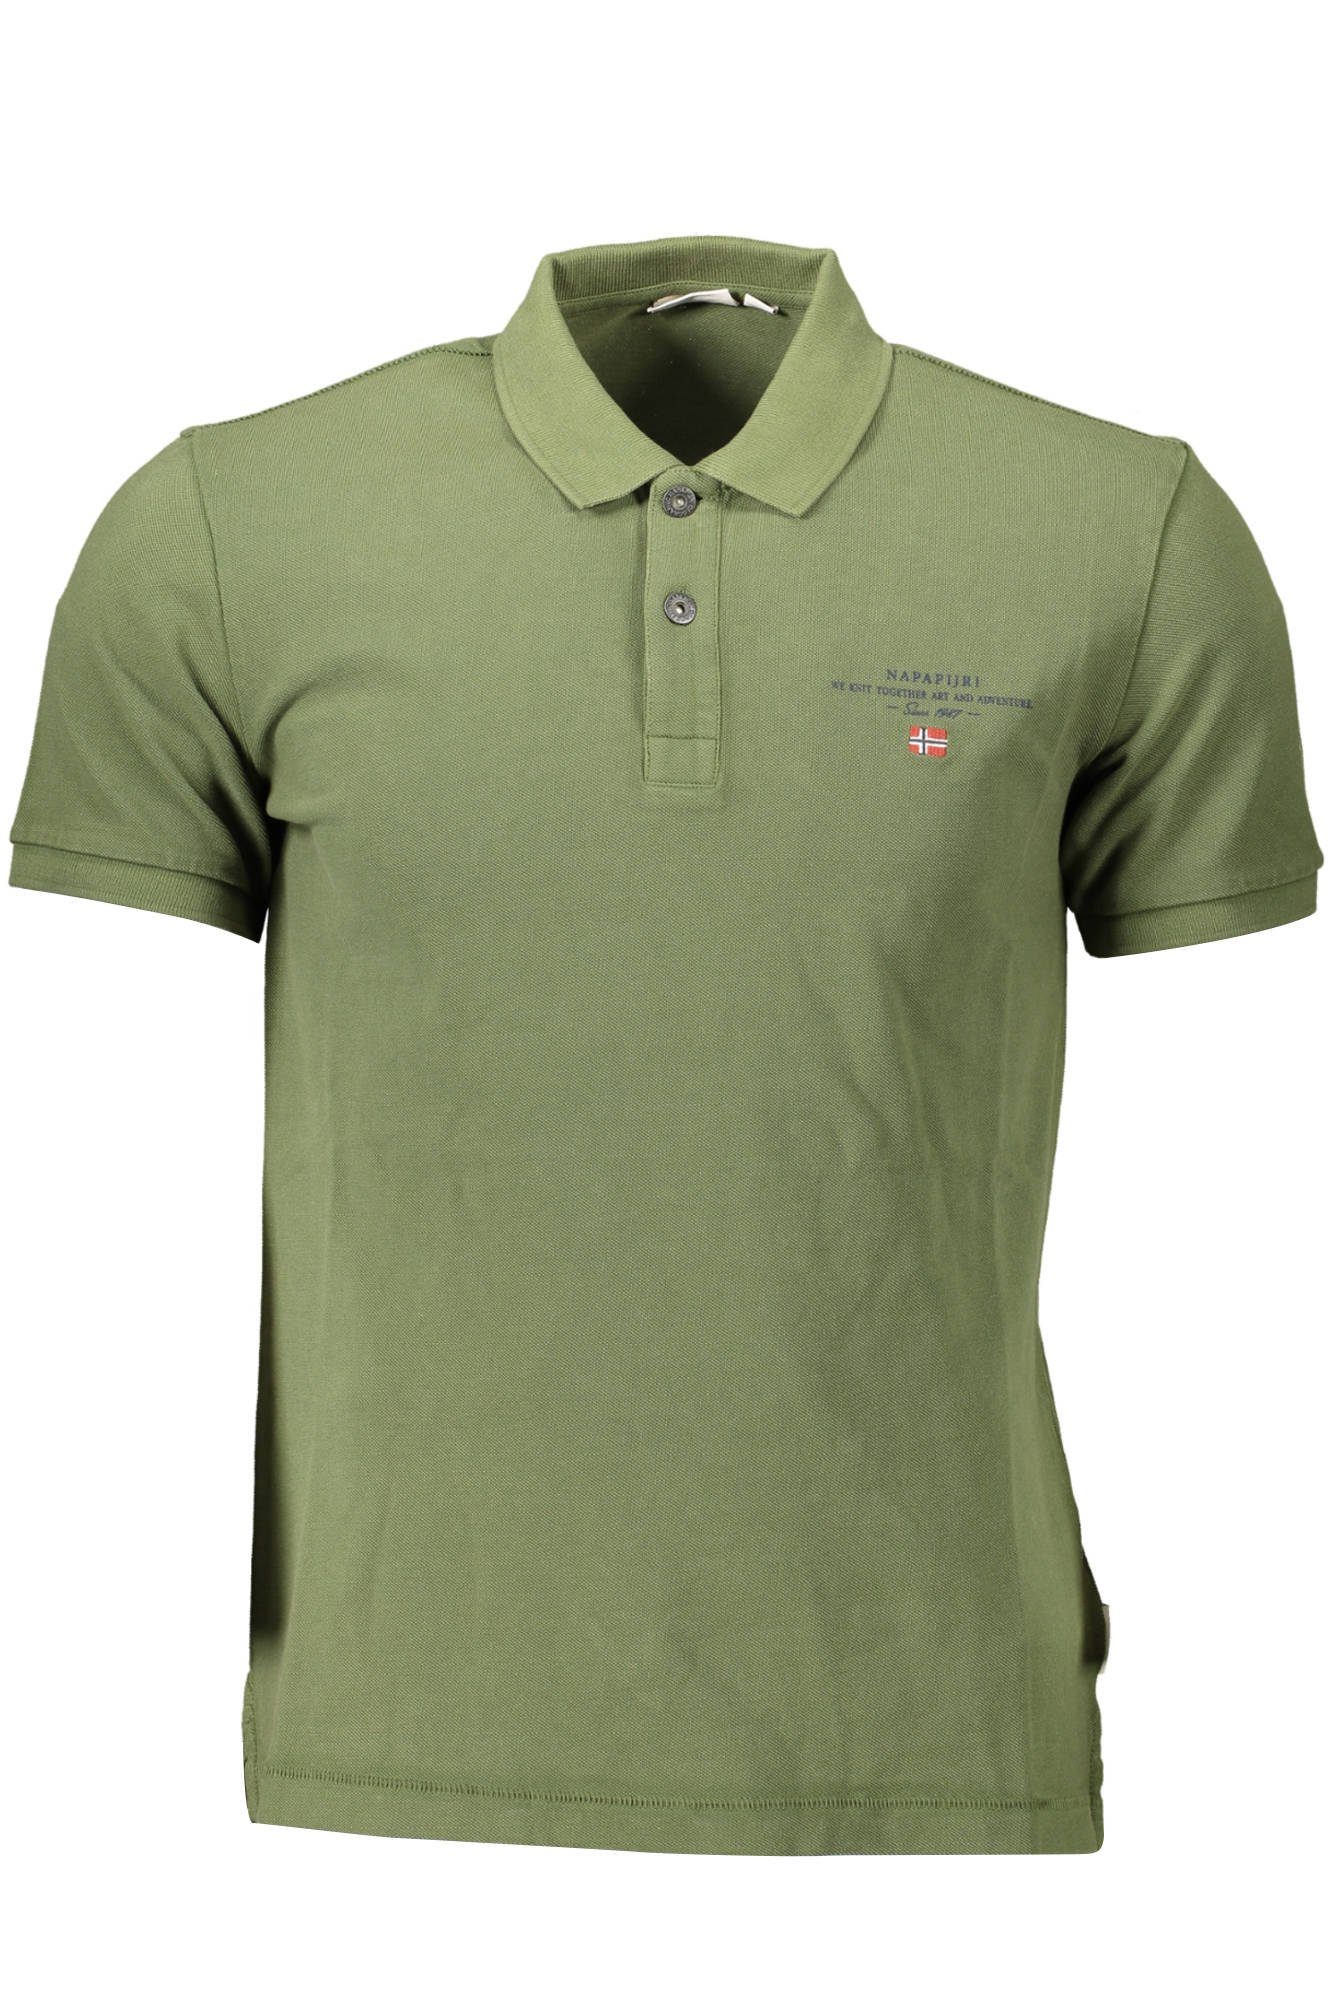 Napapijri Poloshirt Napapijri Herren Poloshirt Polohemd T-Shirt kurzarm, mit Knöpfen grün (g2c green cypress)